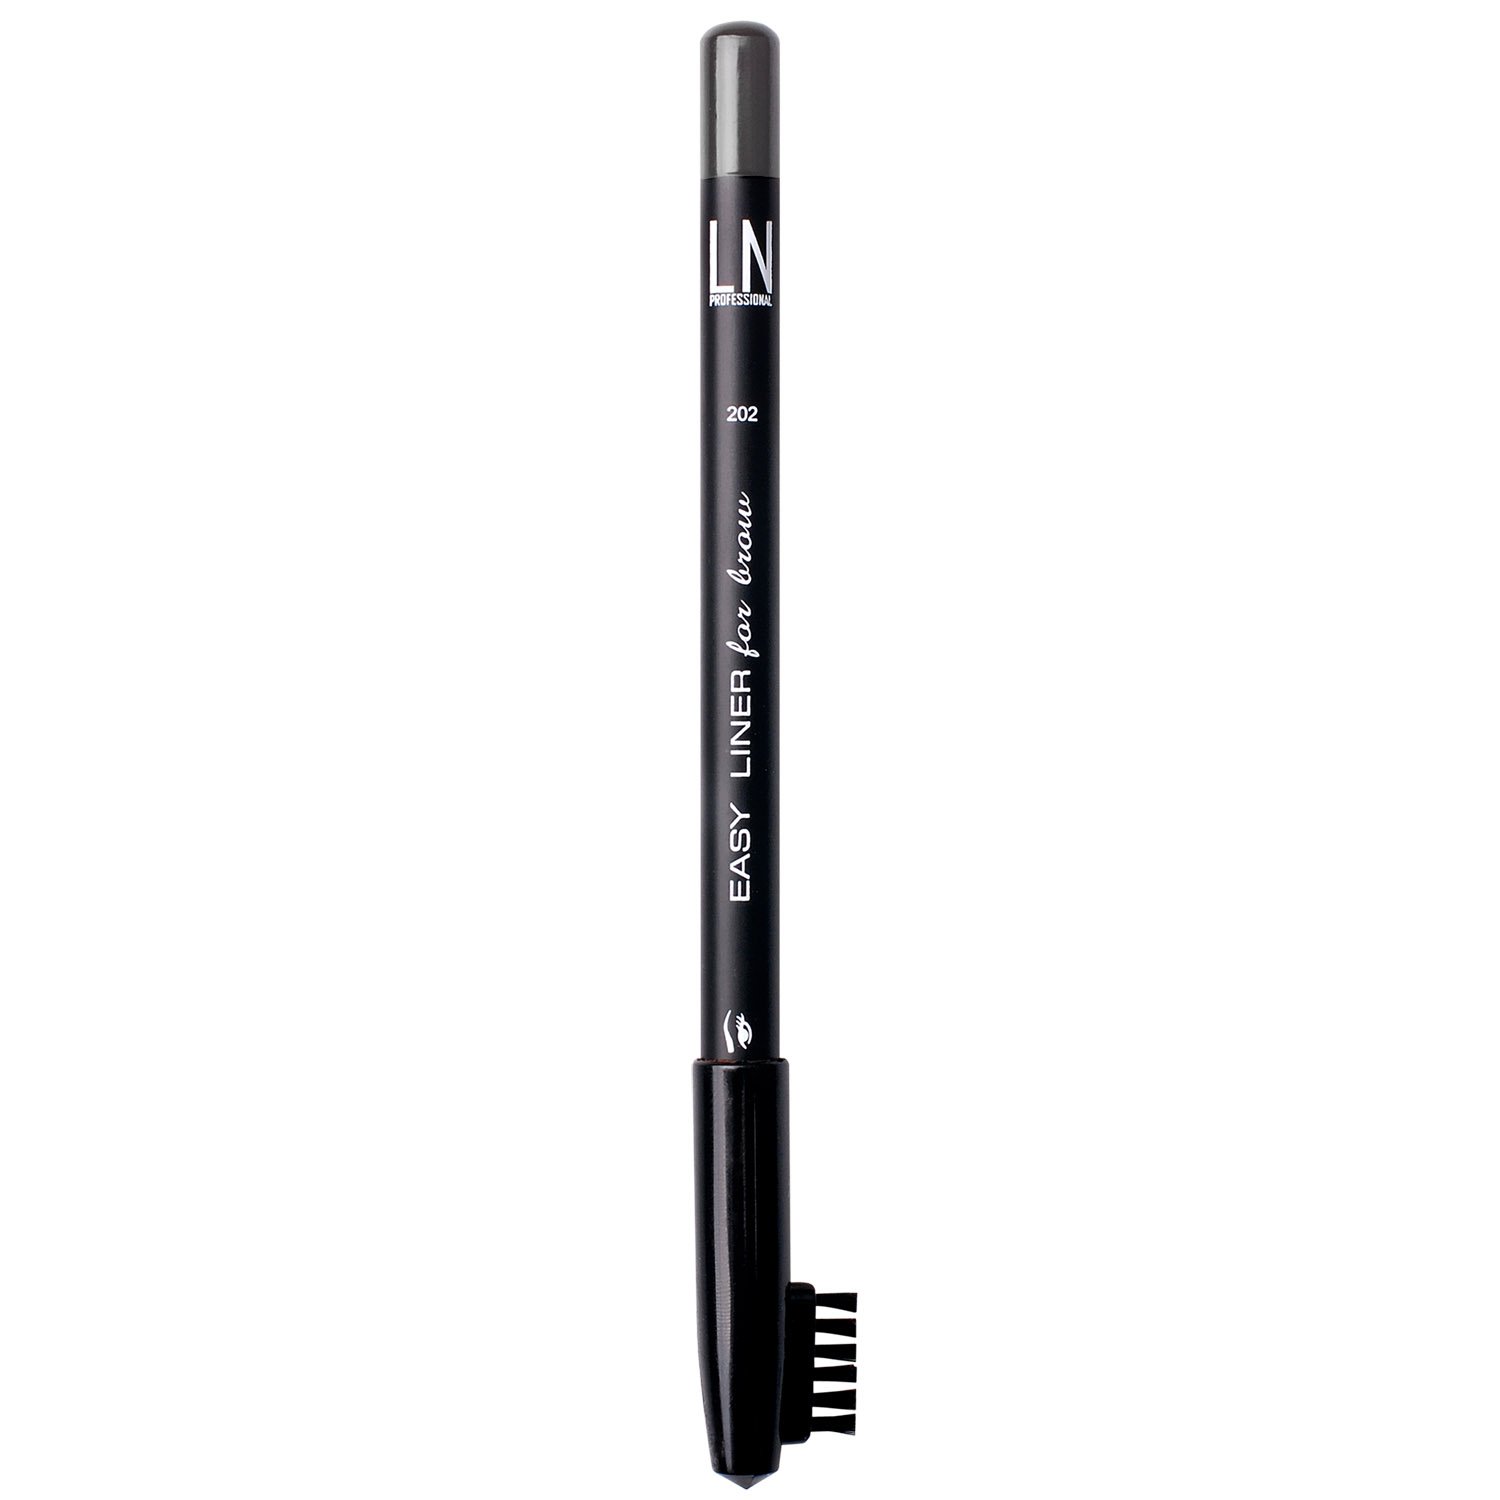 Карандаш для бровей LN Professional Easy Liner Brow Pencil тон 202, 1.7 г - фото 1